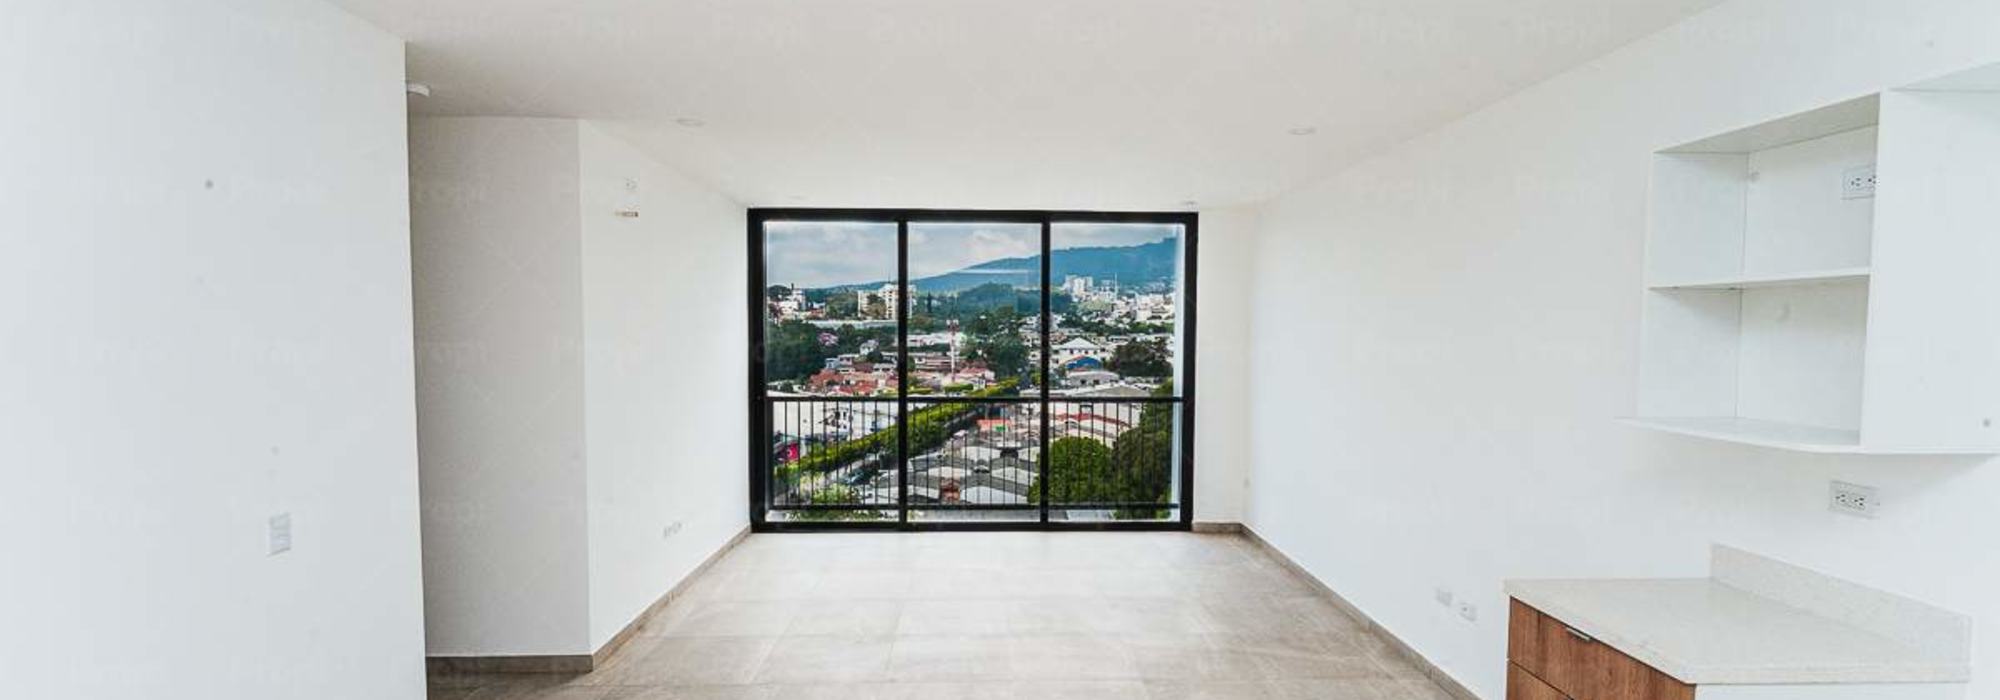 Apartamento en alquiler en Condominio 71, Colonia Escalon, San Salvador #2201